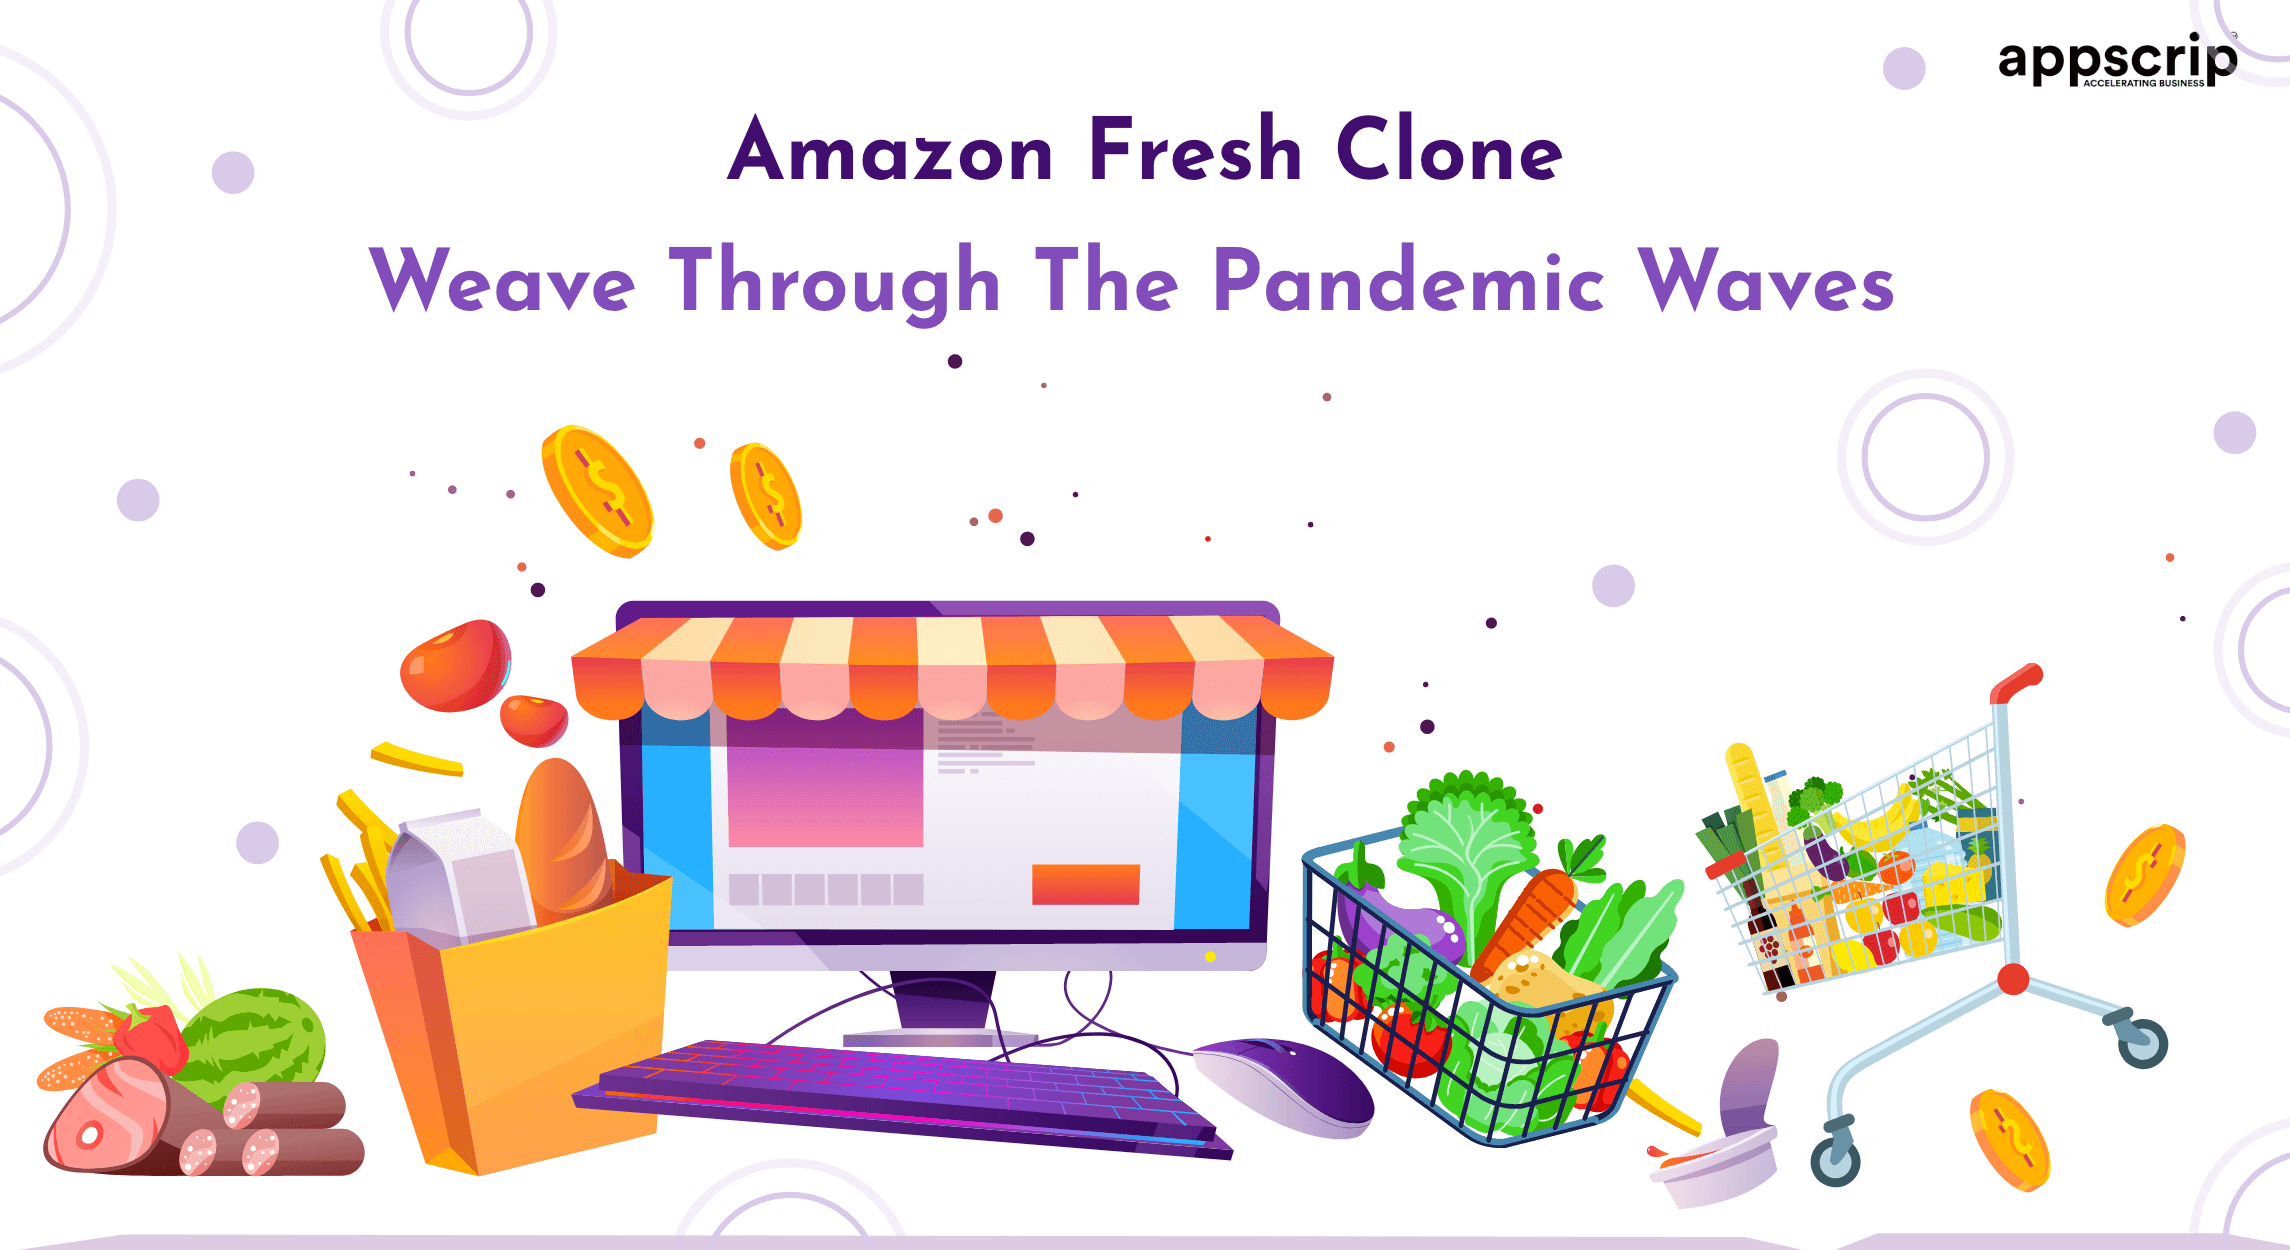 Amazon Fresh Clone: Weave Through The Pandemic Waves